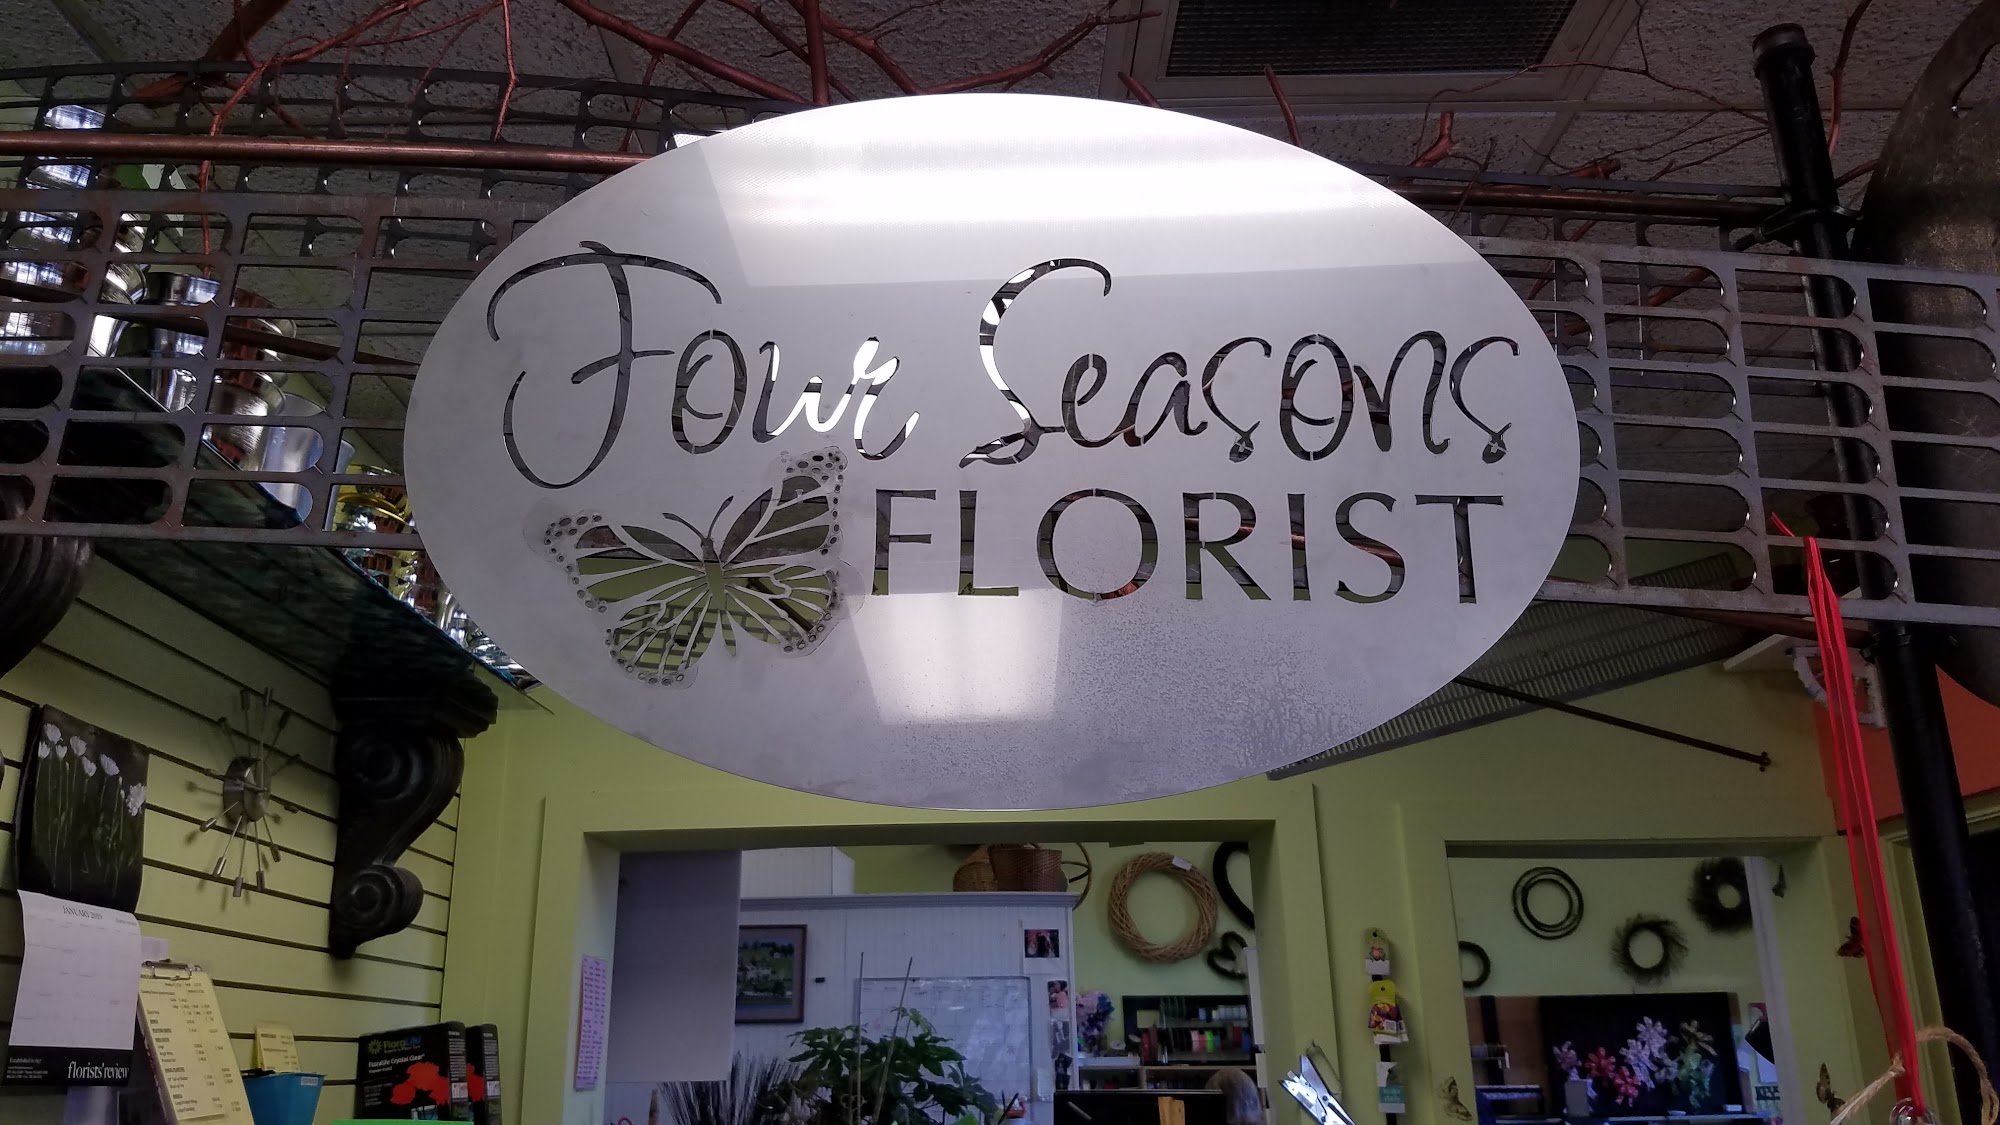 Four Seasons Florist